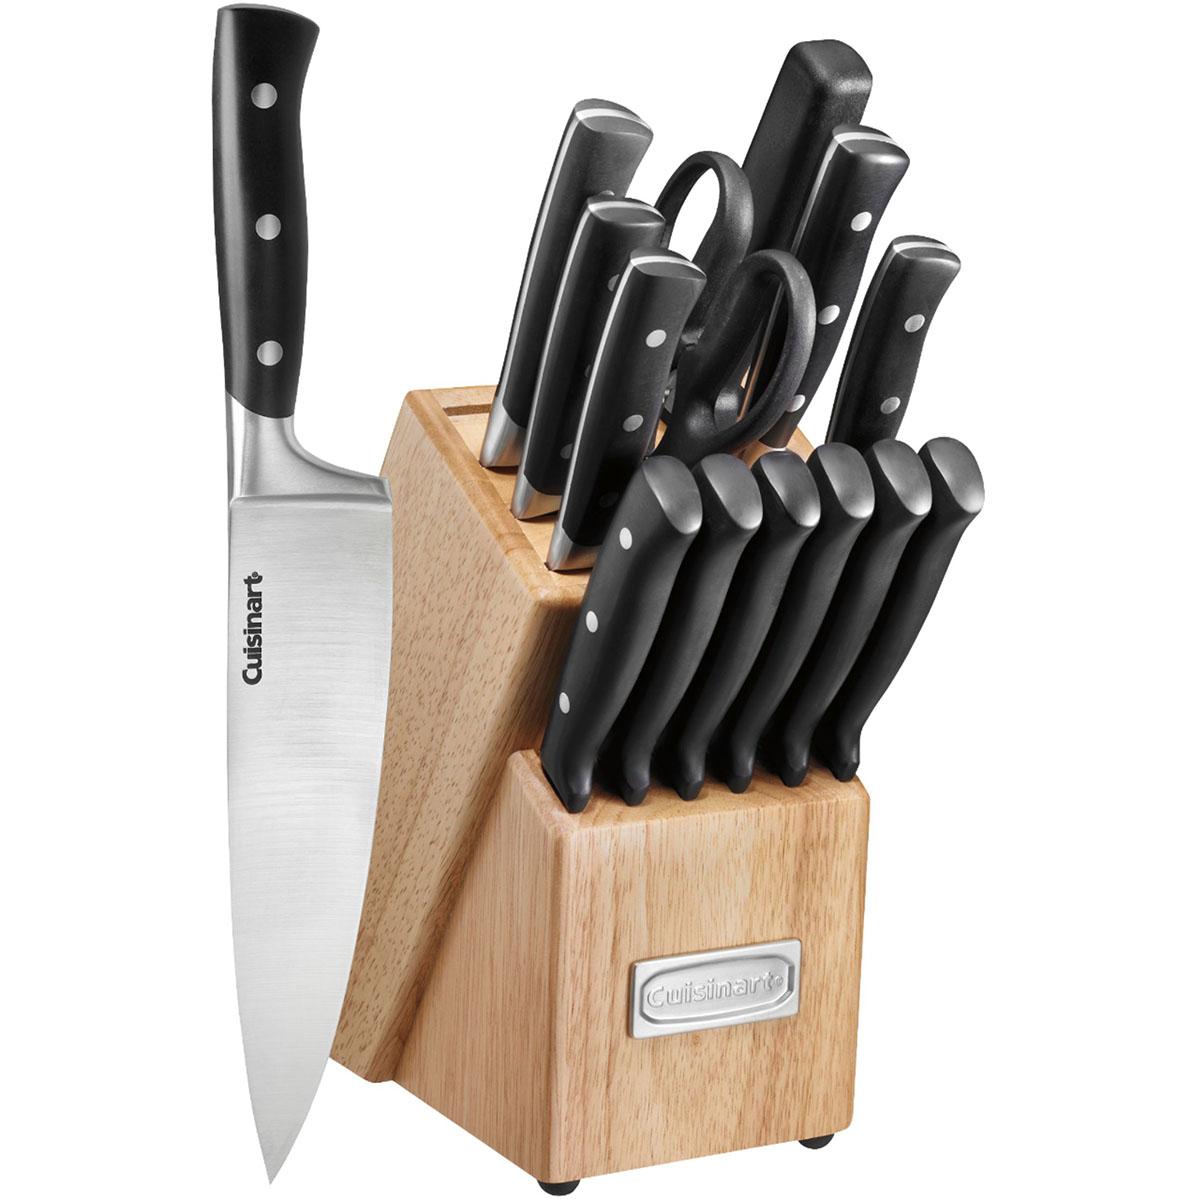 Cuisinart 15-Piece Triple Rivet Stainless Steel Knife Set for $59.99 Shipped